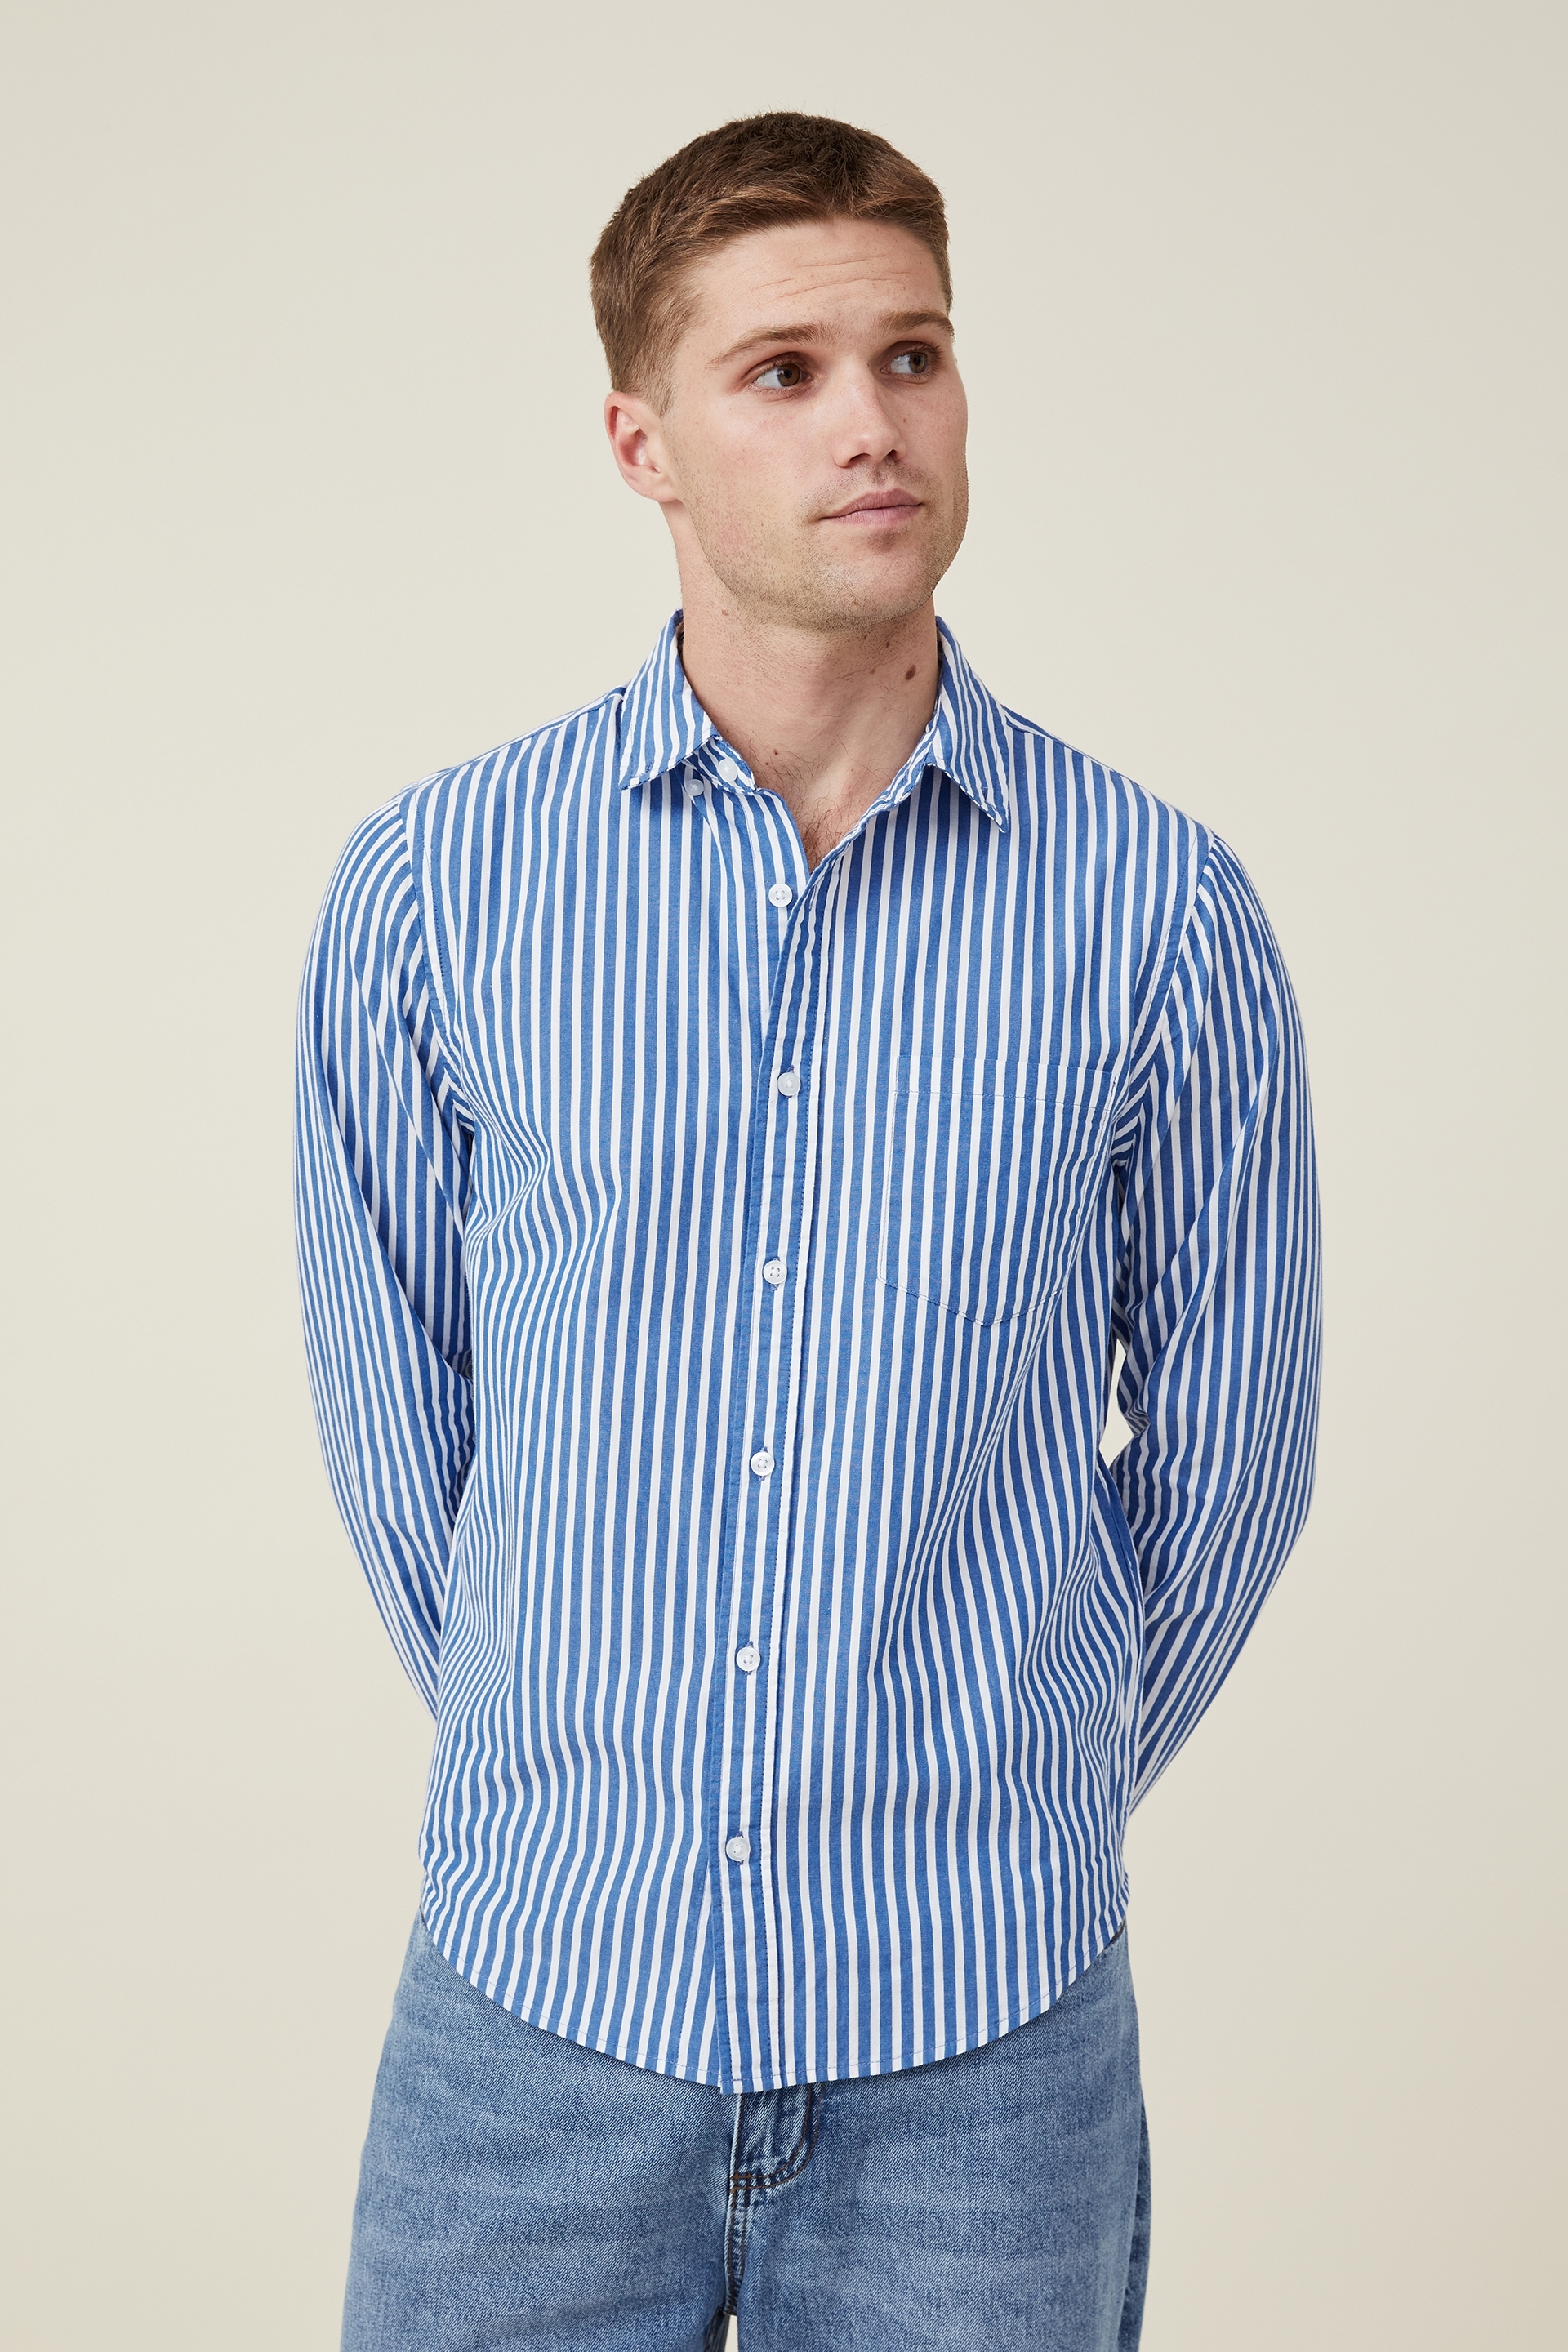 Cotton On Men - Mayfair Long Sleeve Shirt - Cobalt stripe